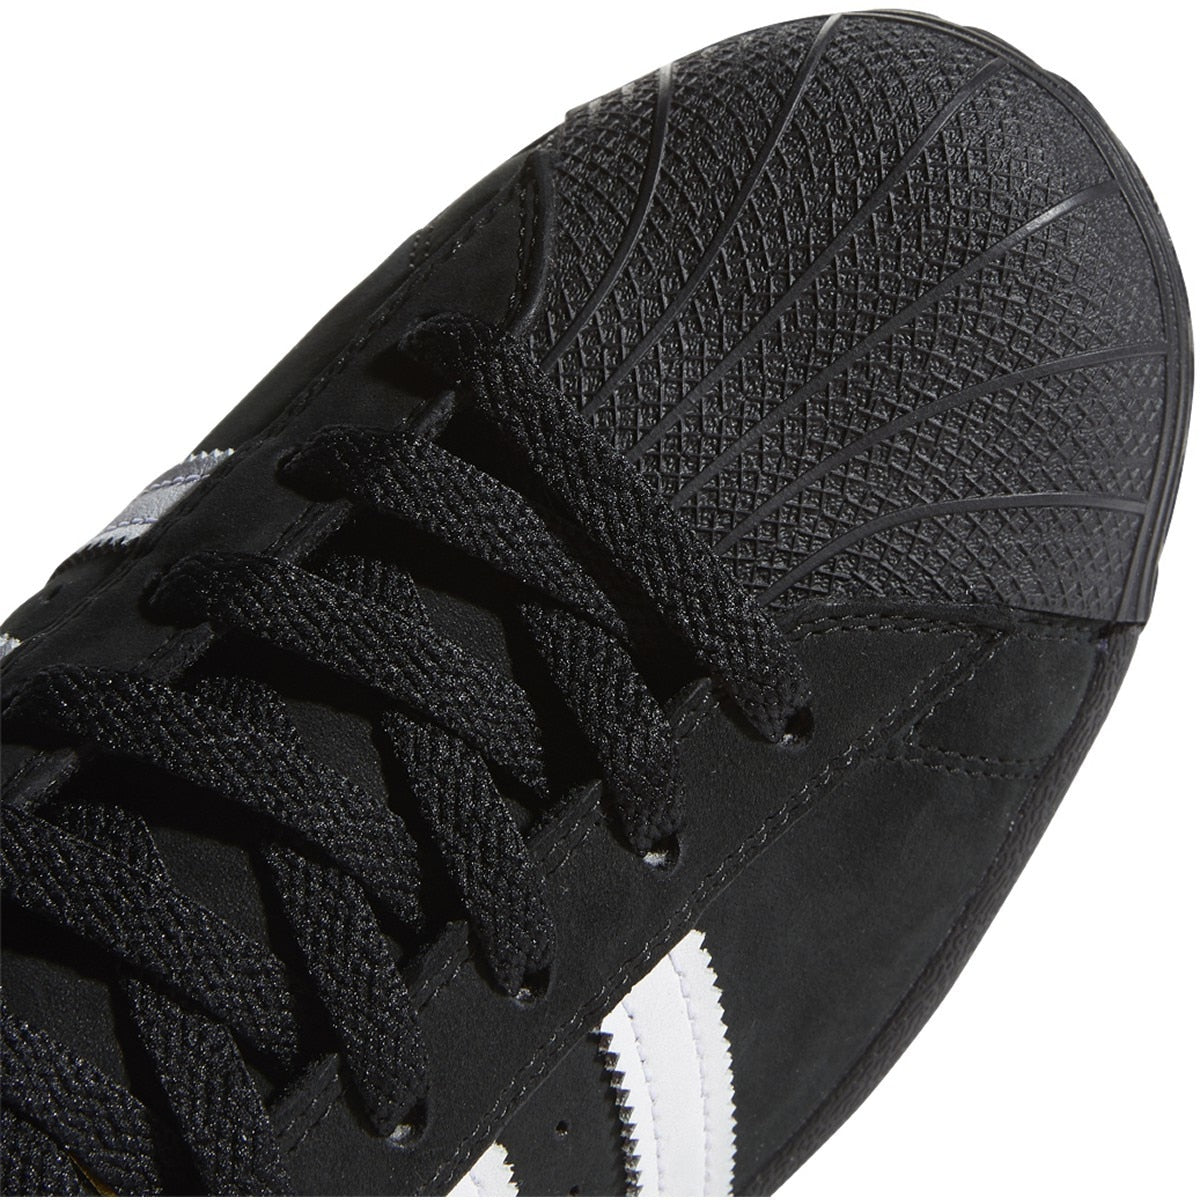 Adidas Superstar ADV Skate Shoe - Core Black/White/Gold Metallic